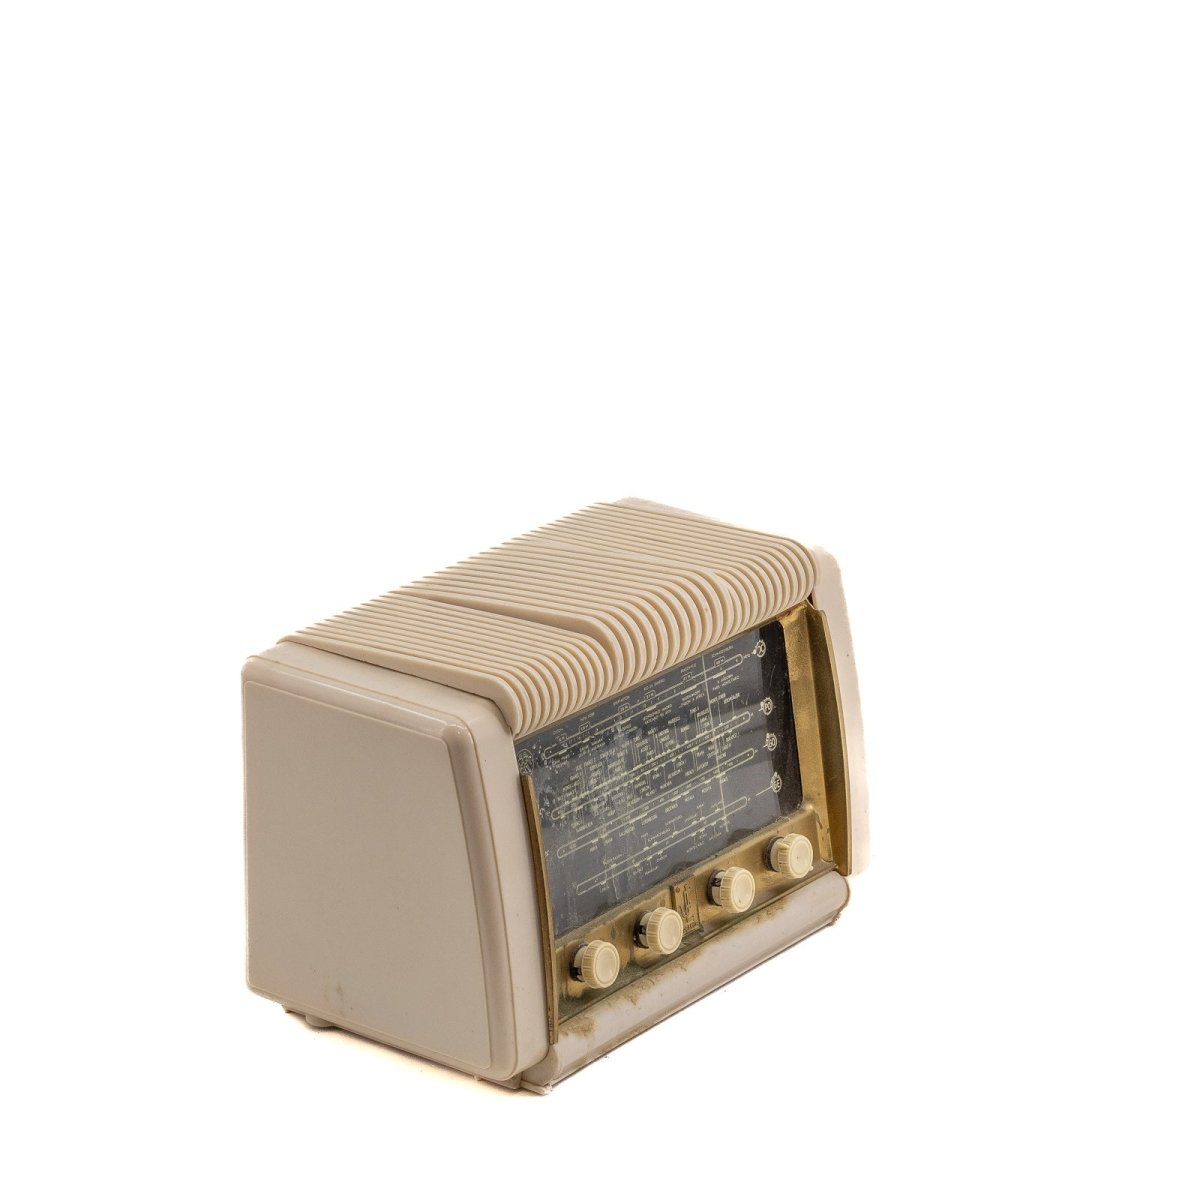 Radio Bluetooth Schneider Vintage 50’S enceinte connectée française haut de gamme absolument prodige radio vintage